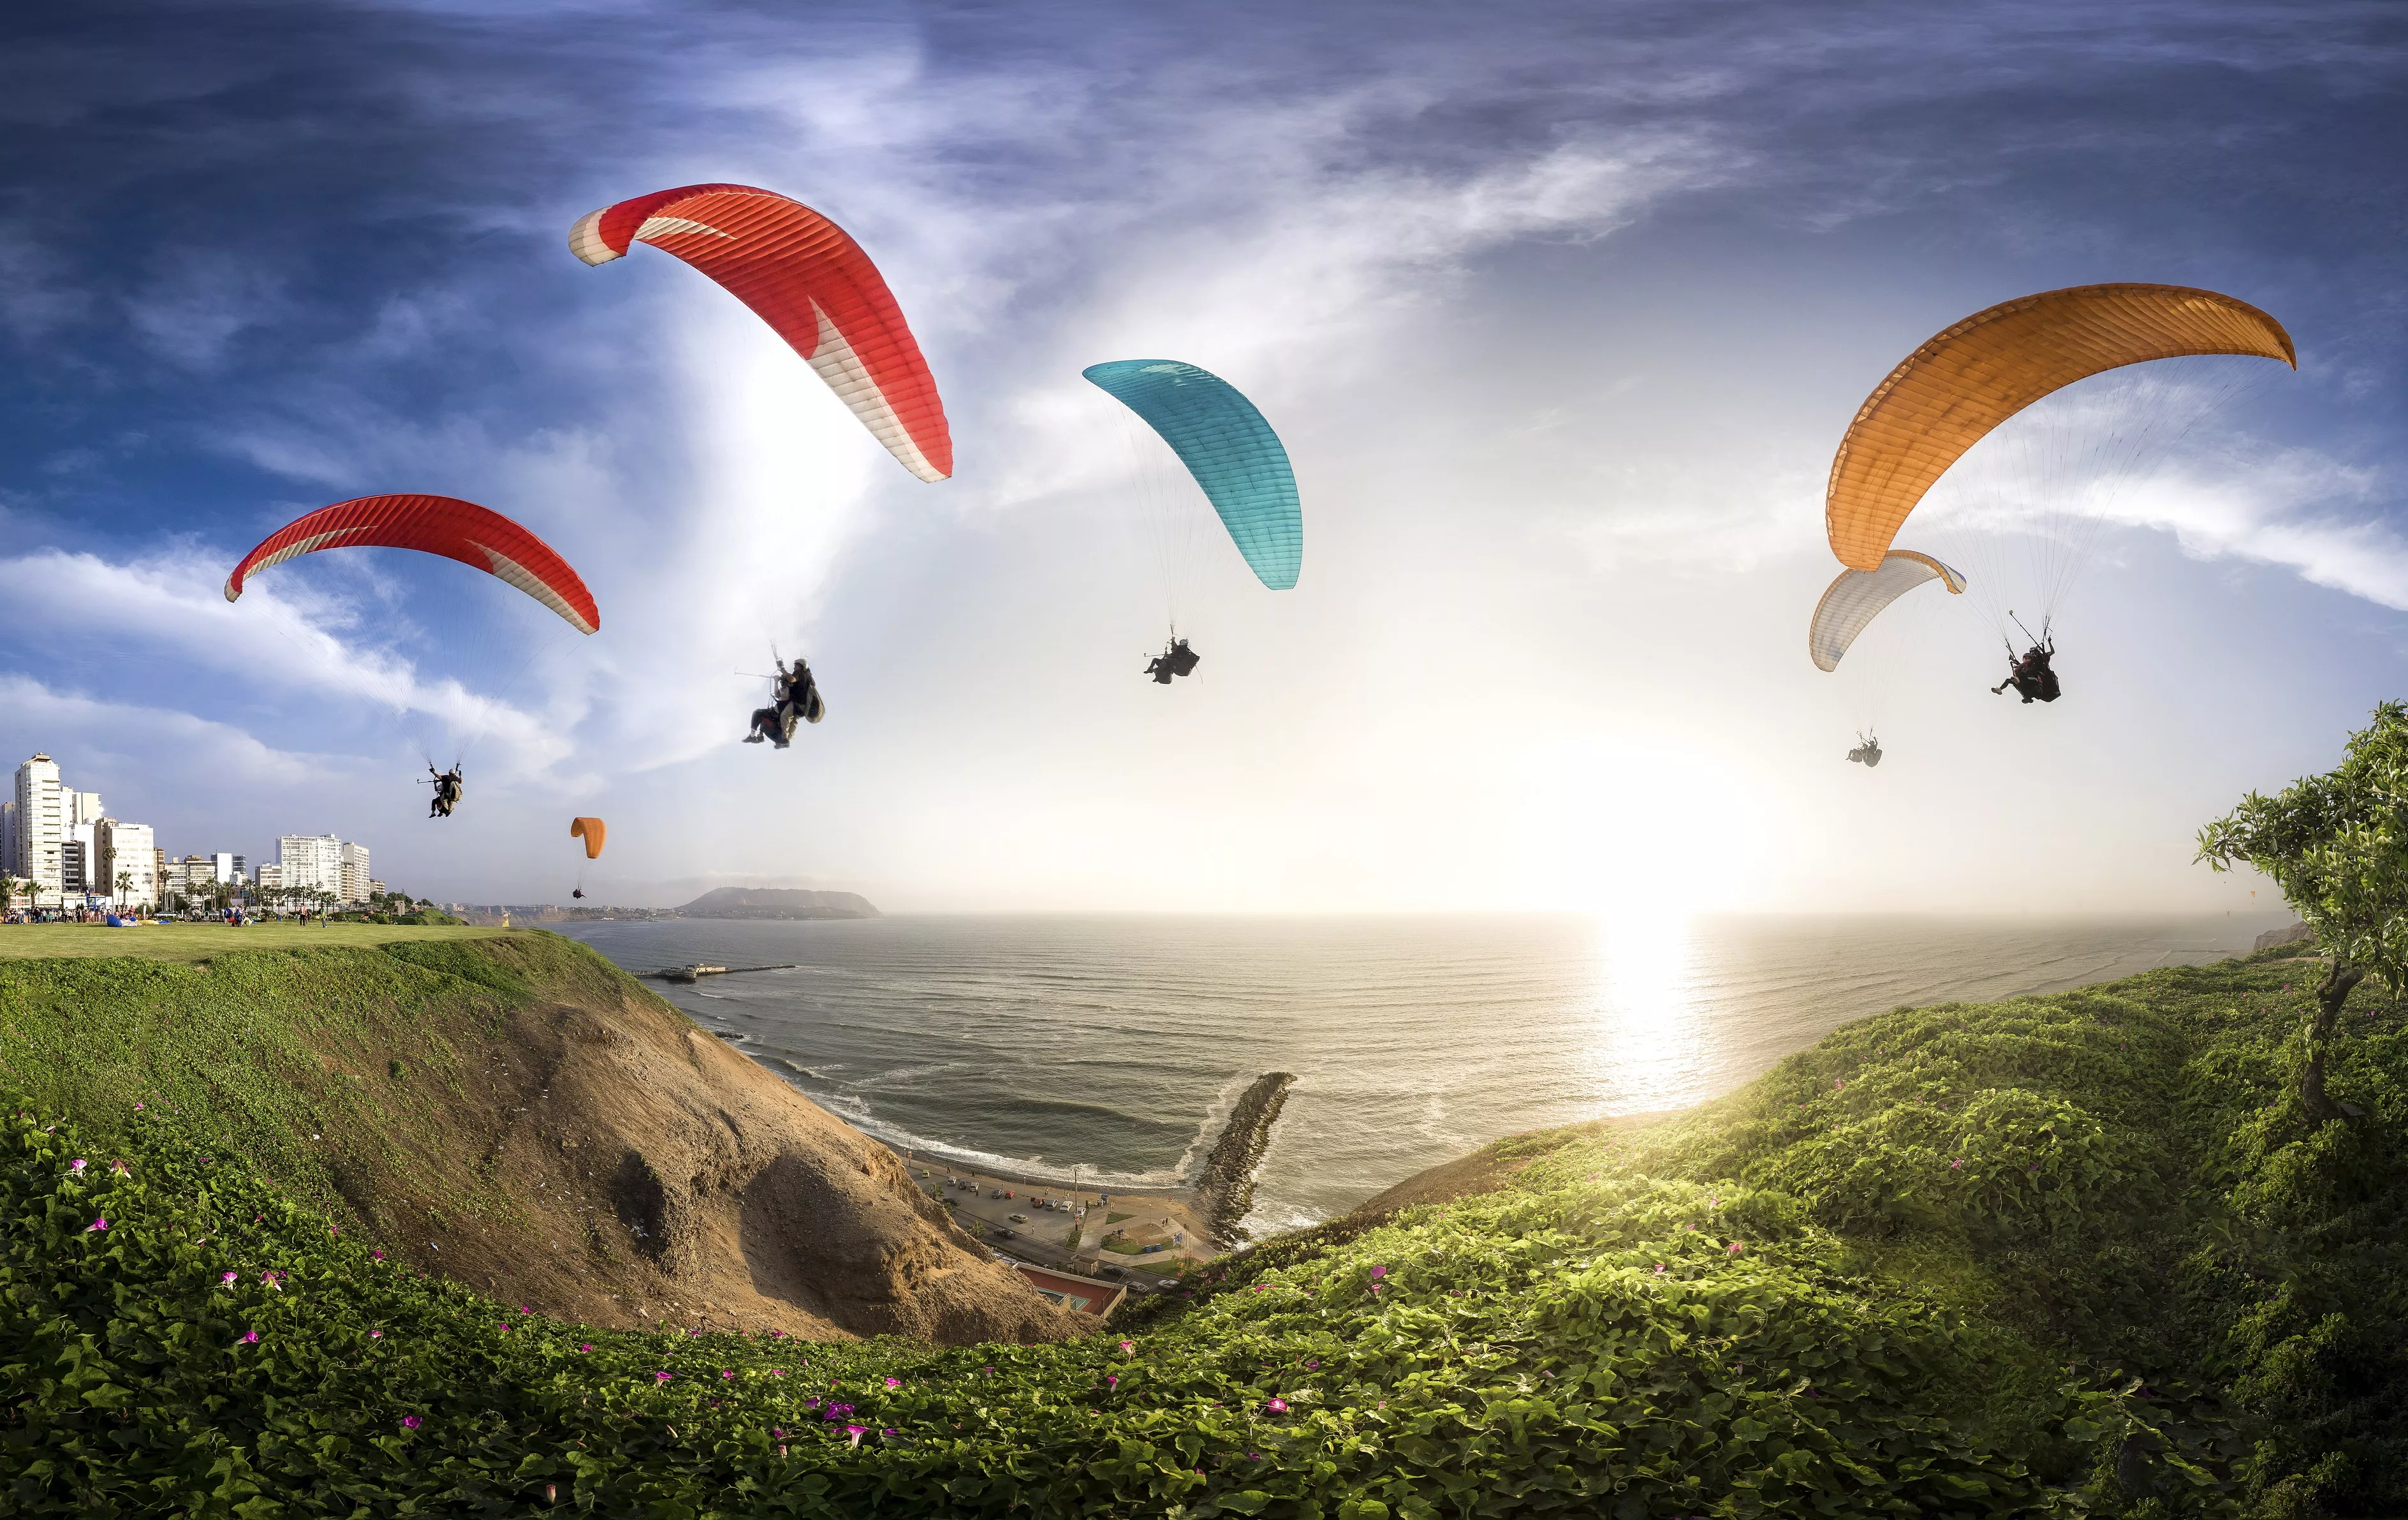 Infinity Escuela de Parapente Lima in Peru, South America | Paragliding - Rated 1.1